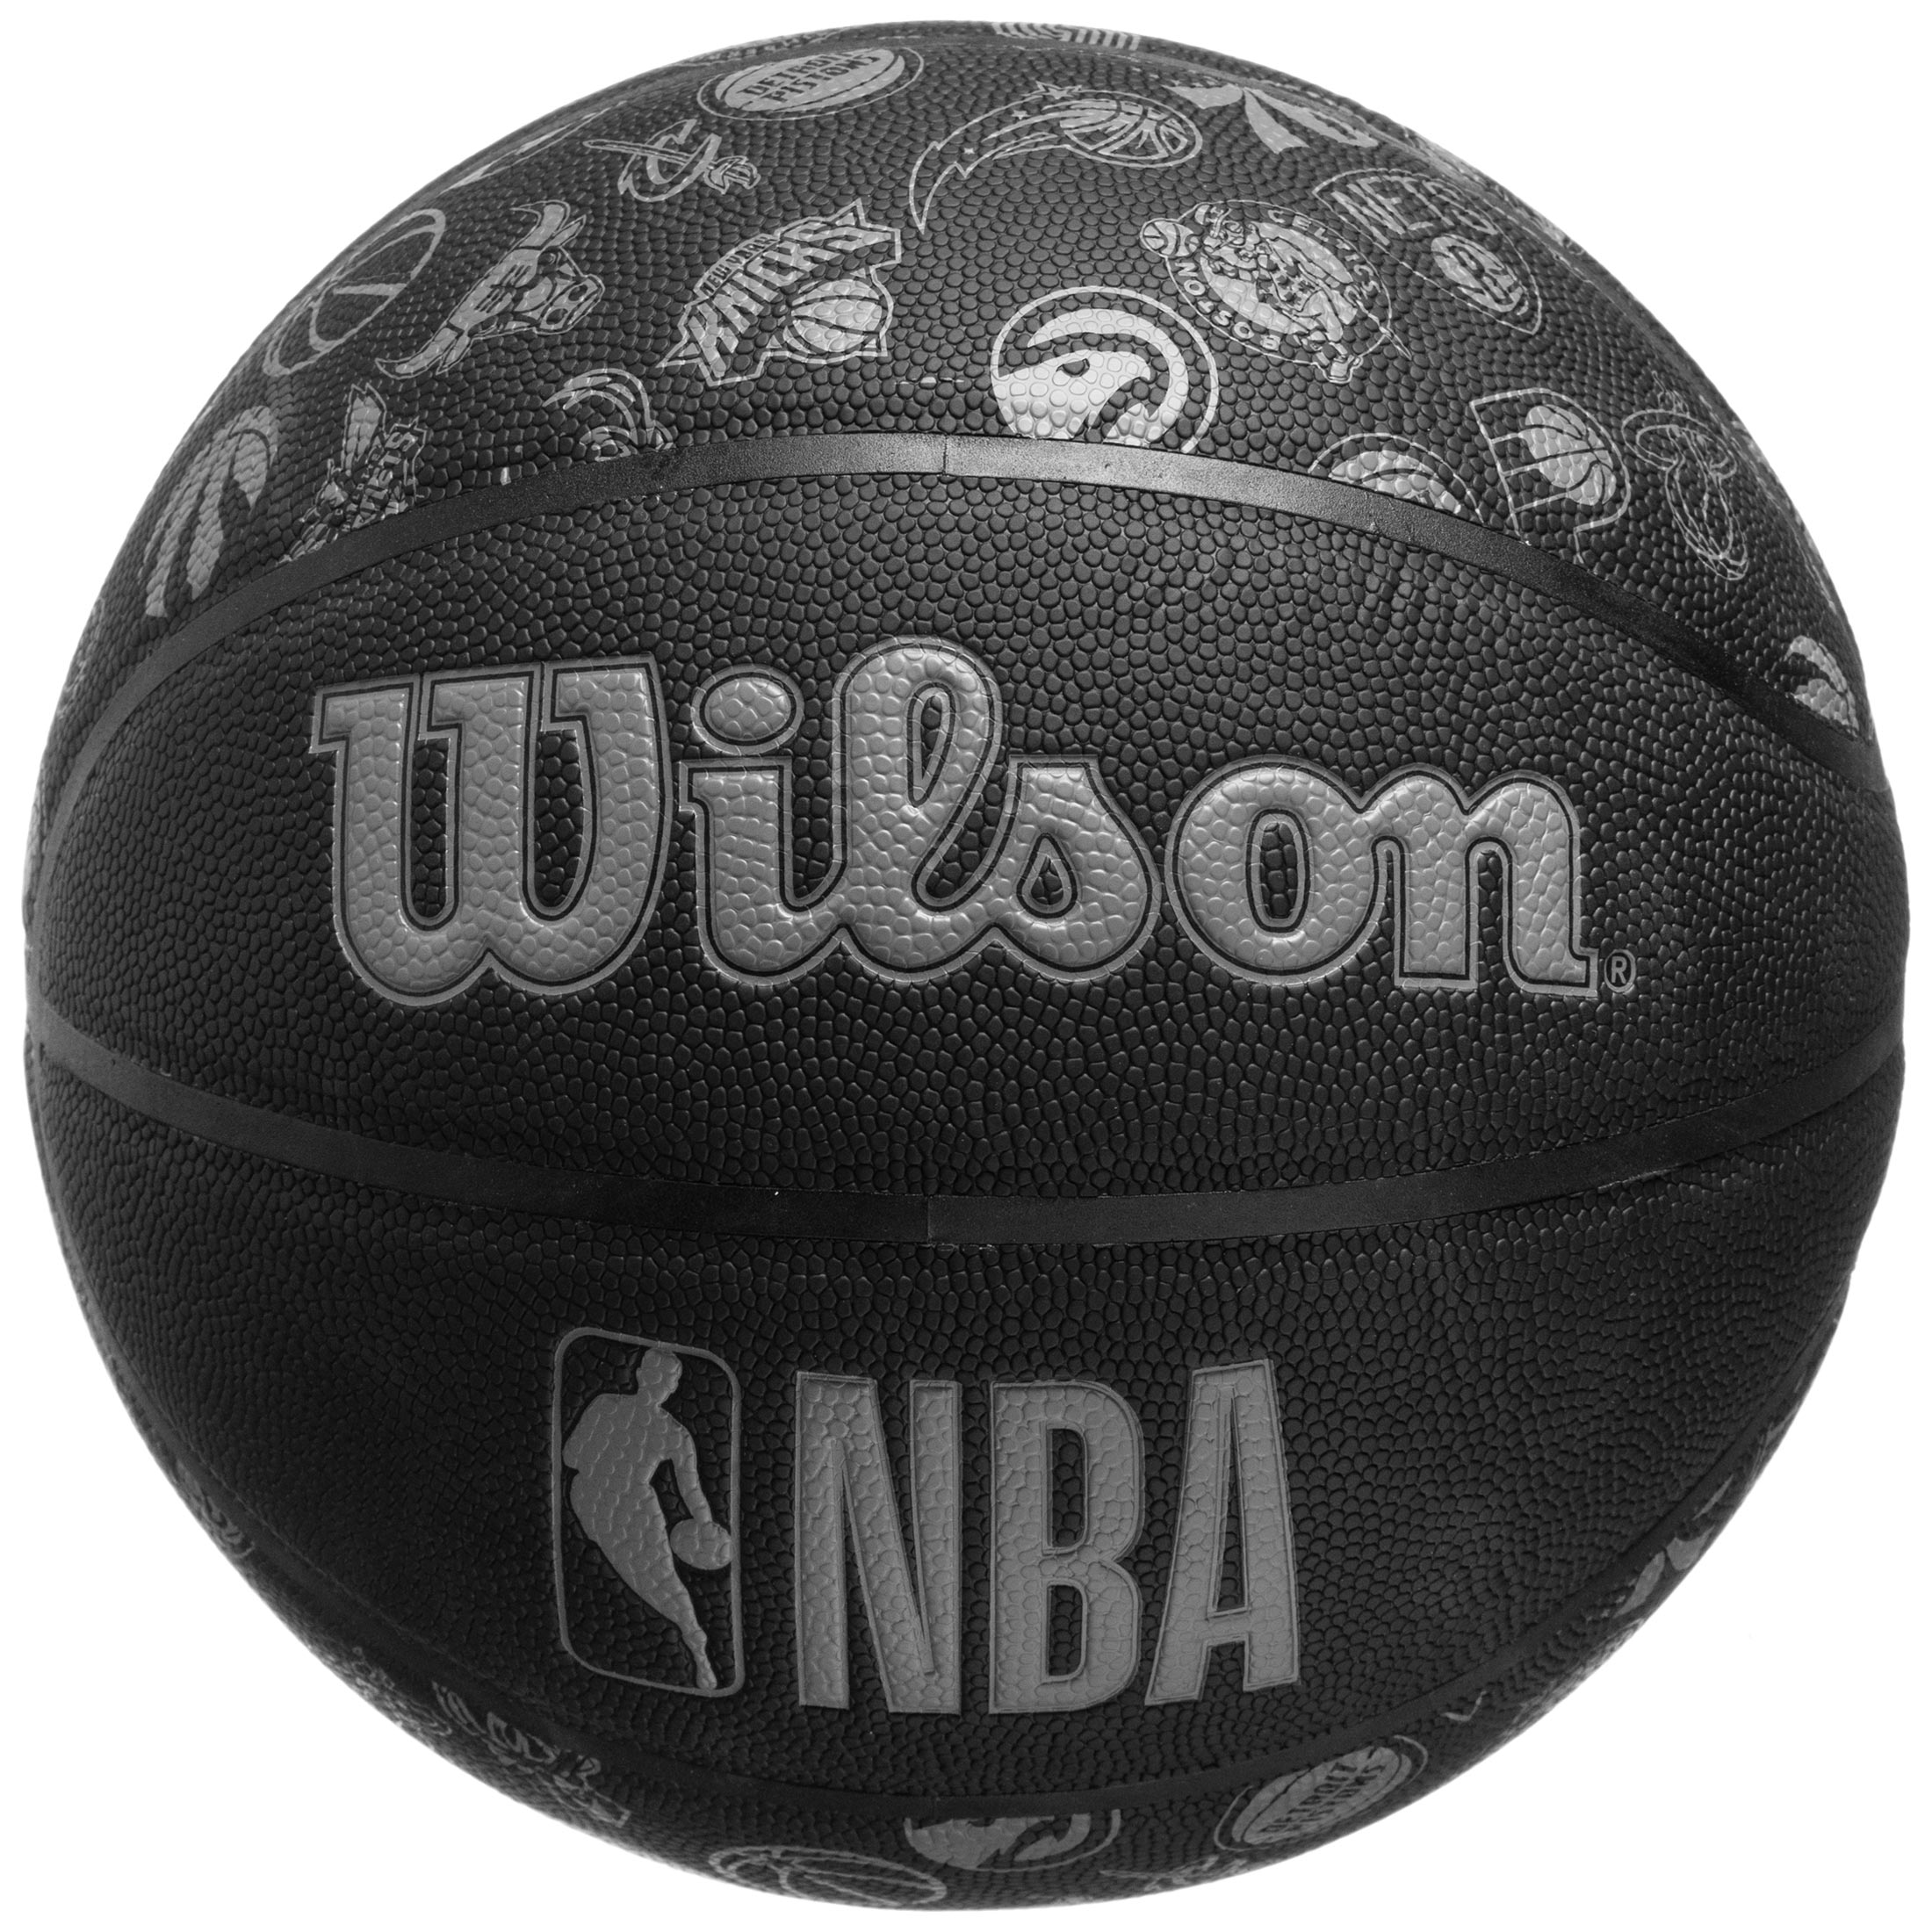 Wilson NBA All Team Basketball schwarz kaufen | Ballside